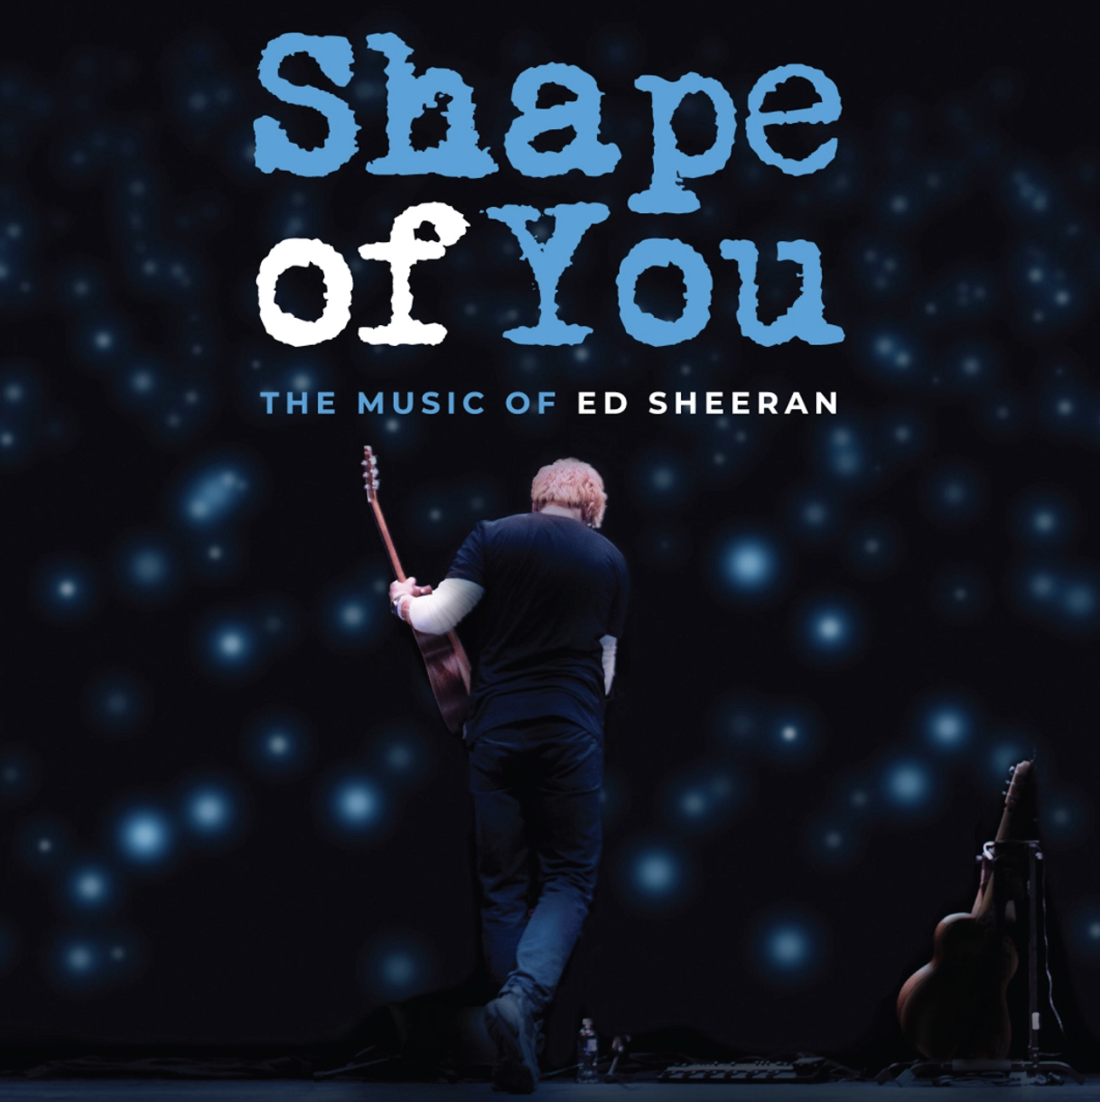 Shape of You: The Music of Ed Sheeran